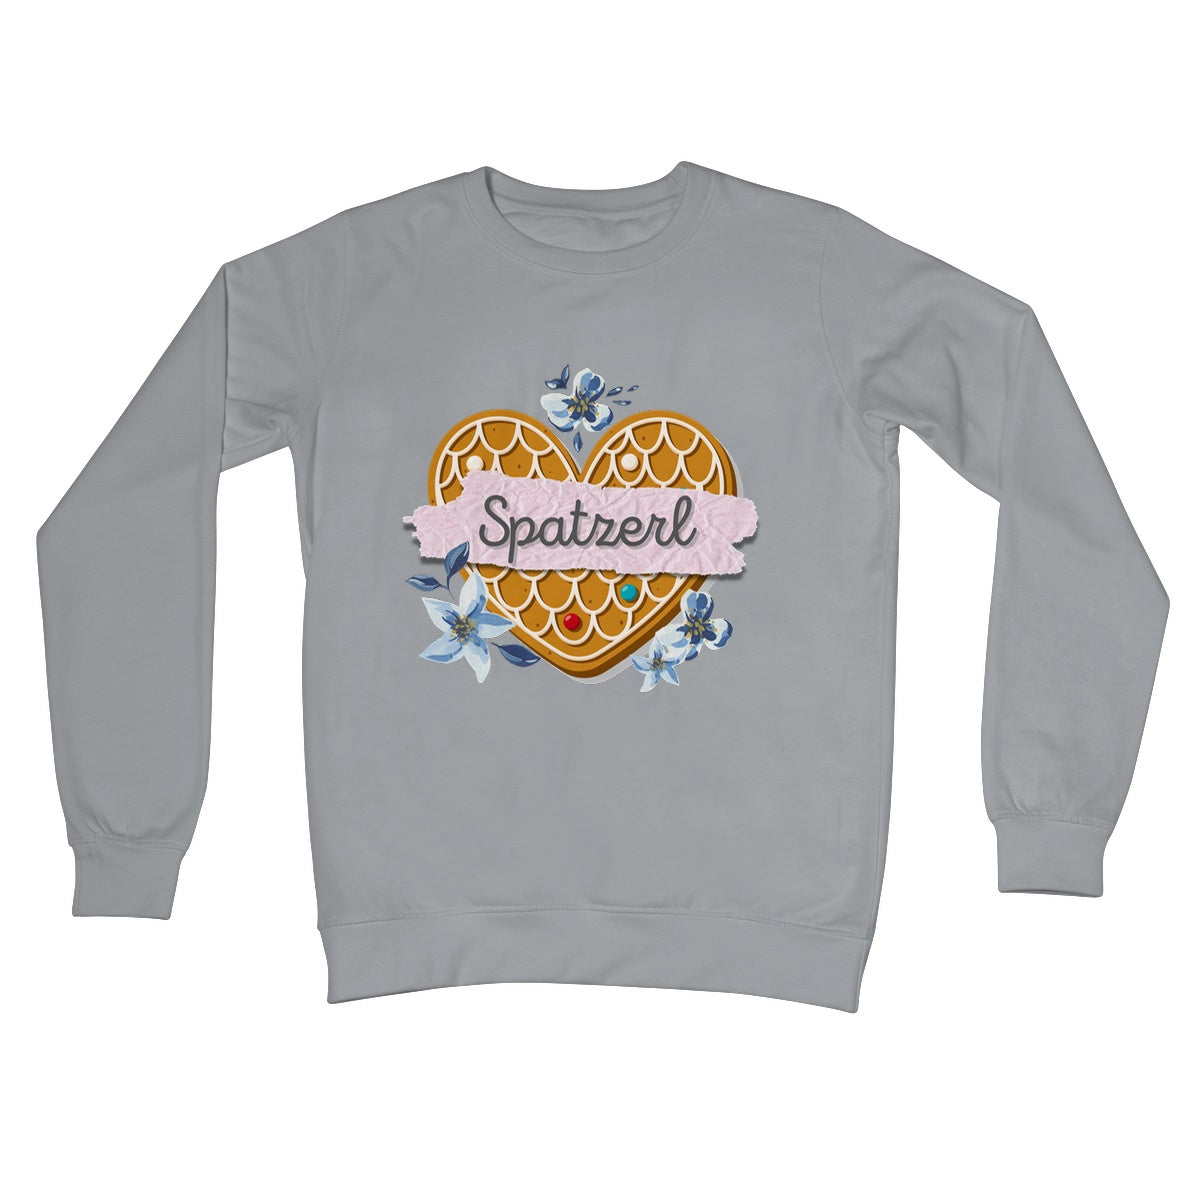 Women's Bavarian Graphic Sweatshirt "Spatzerl" gingerbread heart & floral print - 4 colours - Bavari Shop - Bavarian Outfits, Dirndl, Lederhosen & Accessories